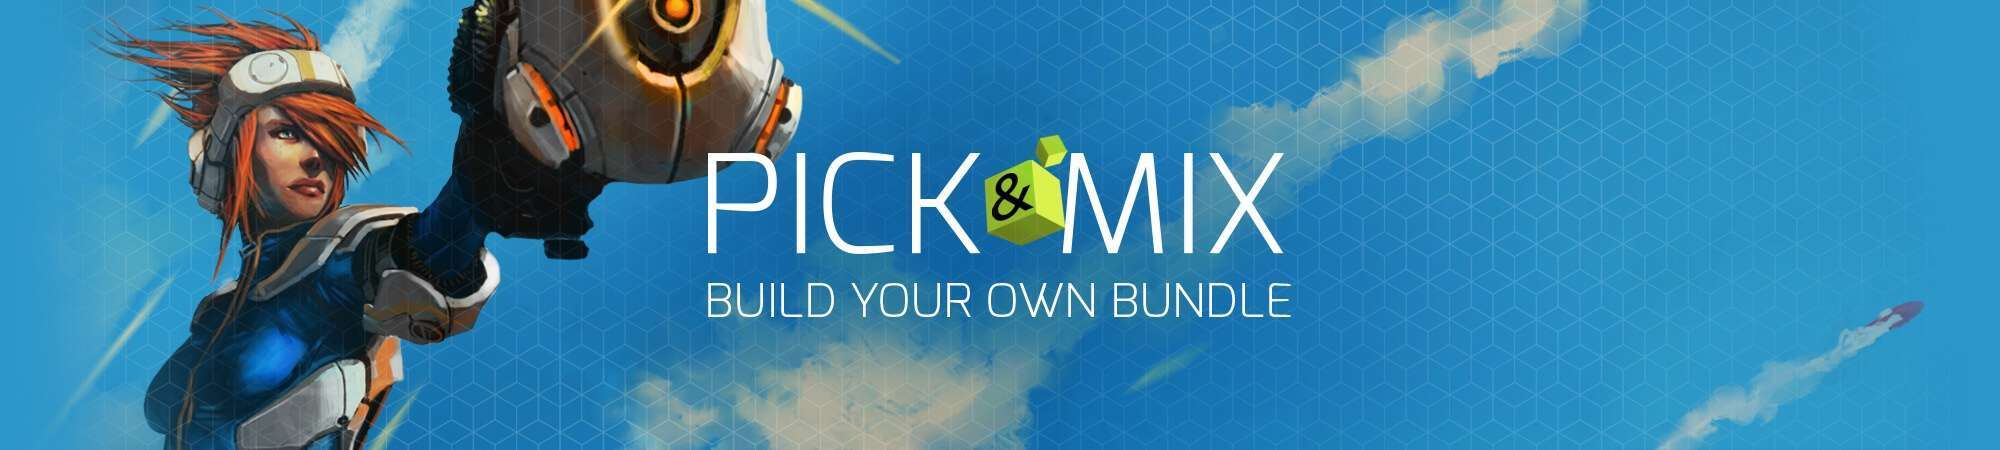 Bundle Stars Pick & Mix Bundle banner image